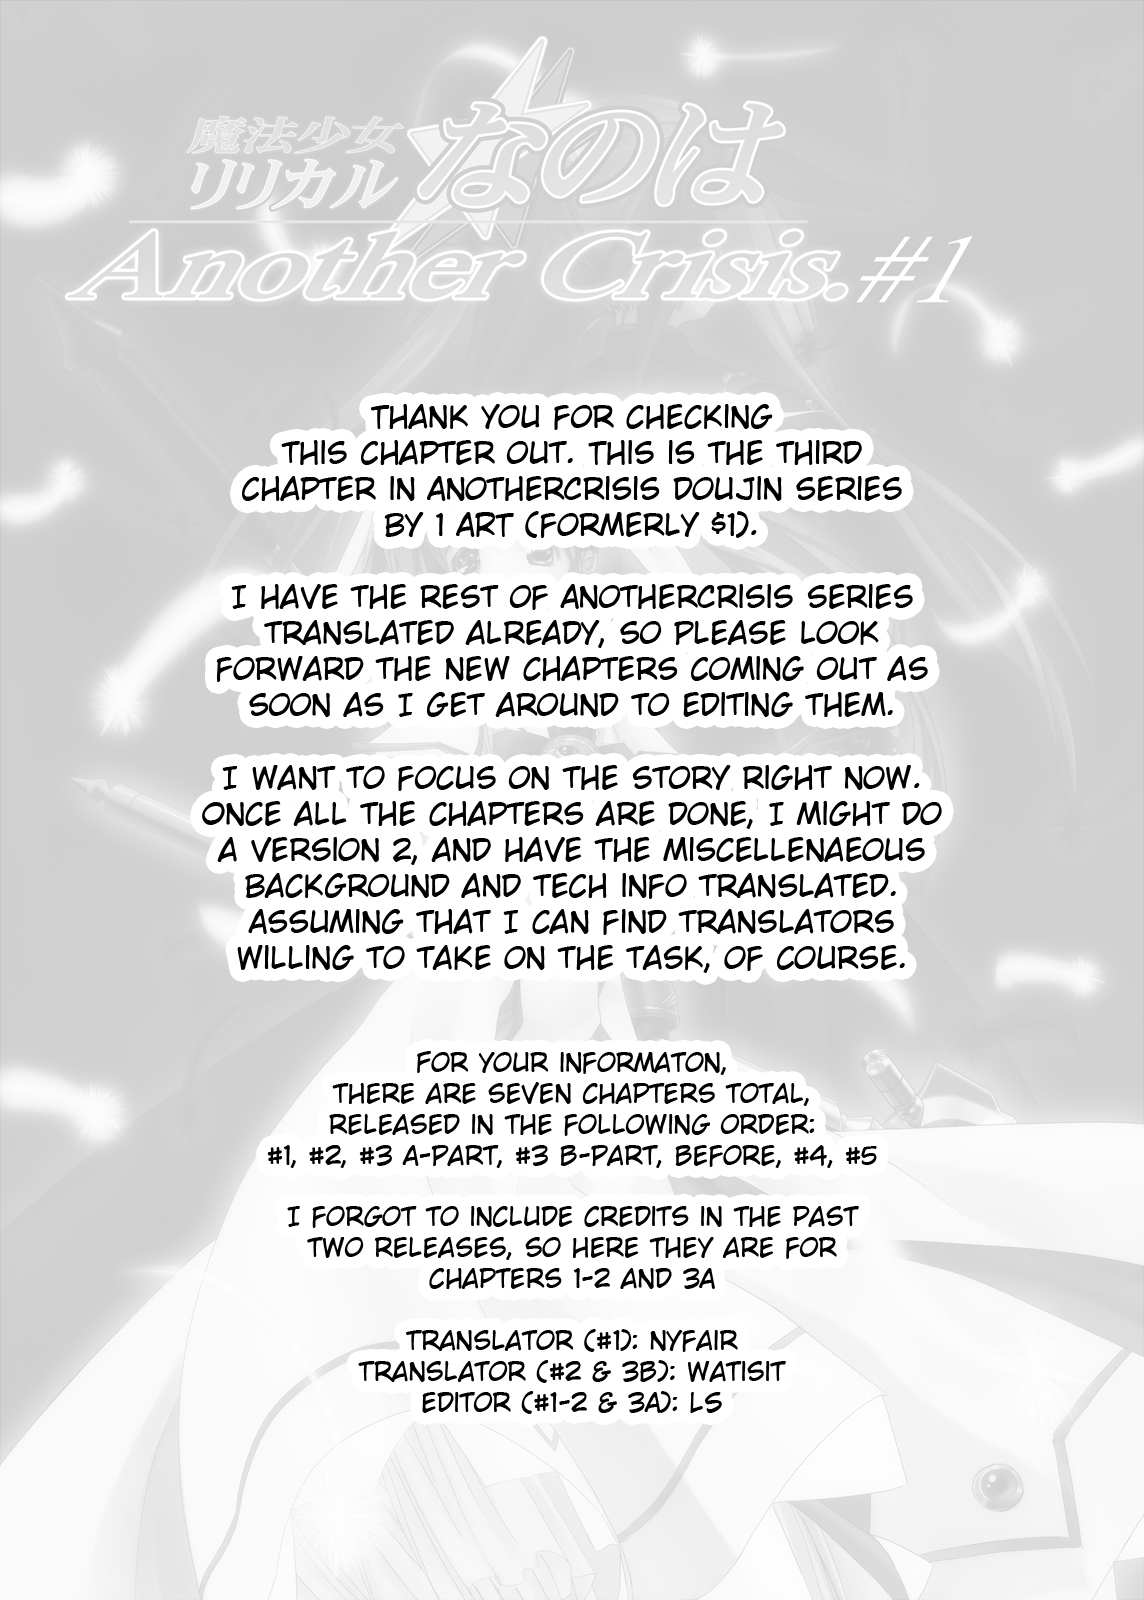 [$1 (TOM)] Mahou Shoujo Lyrical Nanoha - Another Crisis #3 [A Part] (Mahou Shoujo Lyrical Nanoha) [English] 32